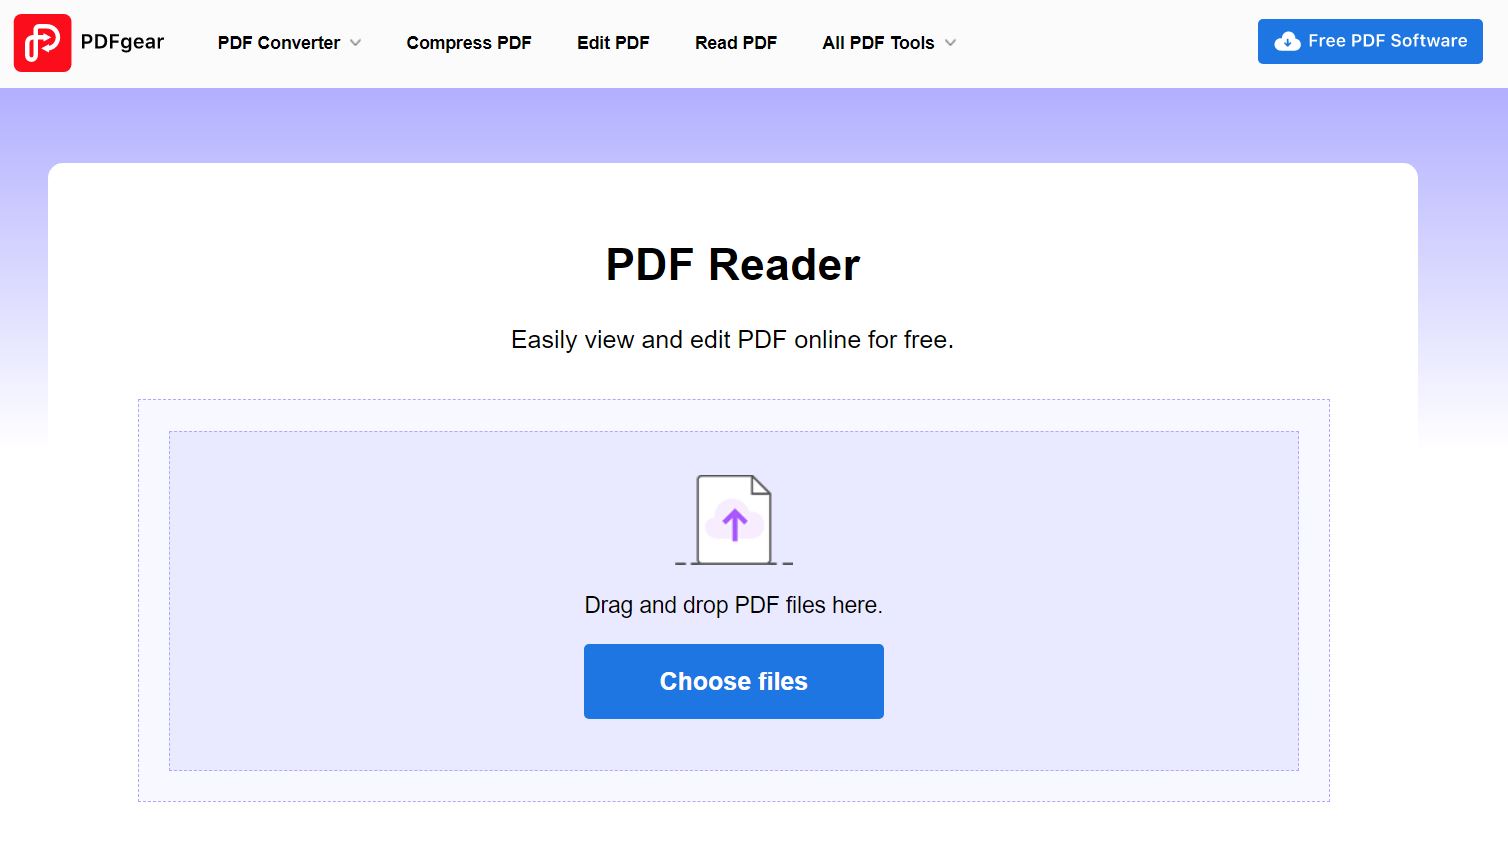 PDF Reader PDFgear